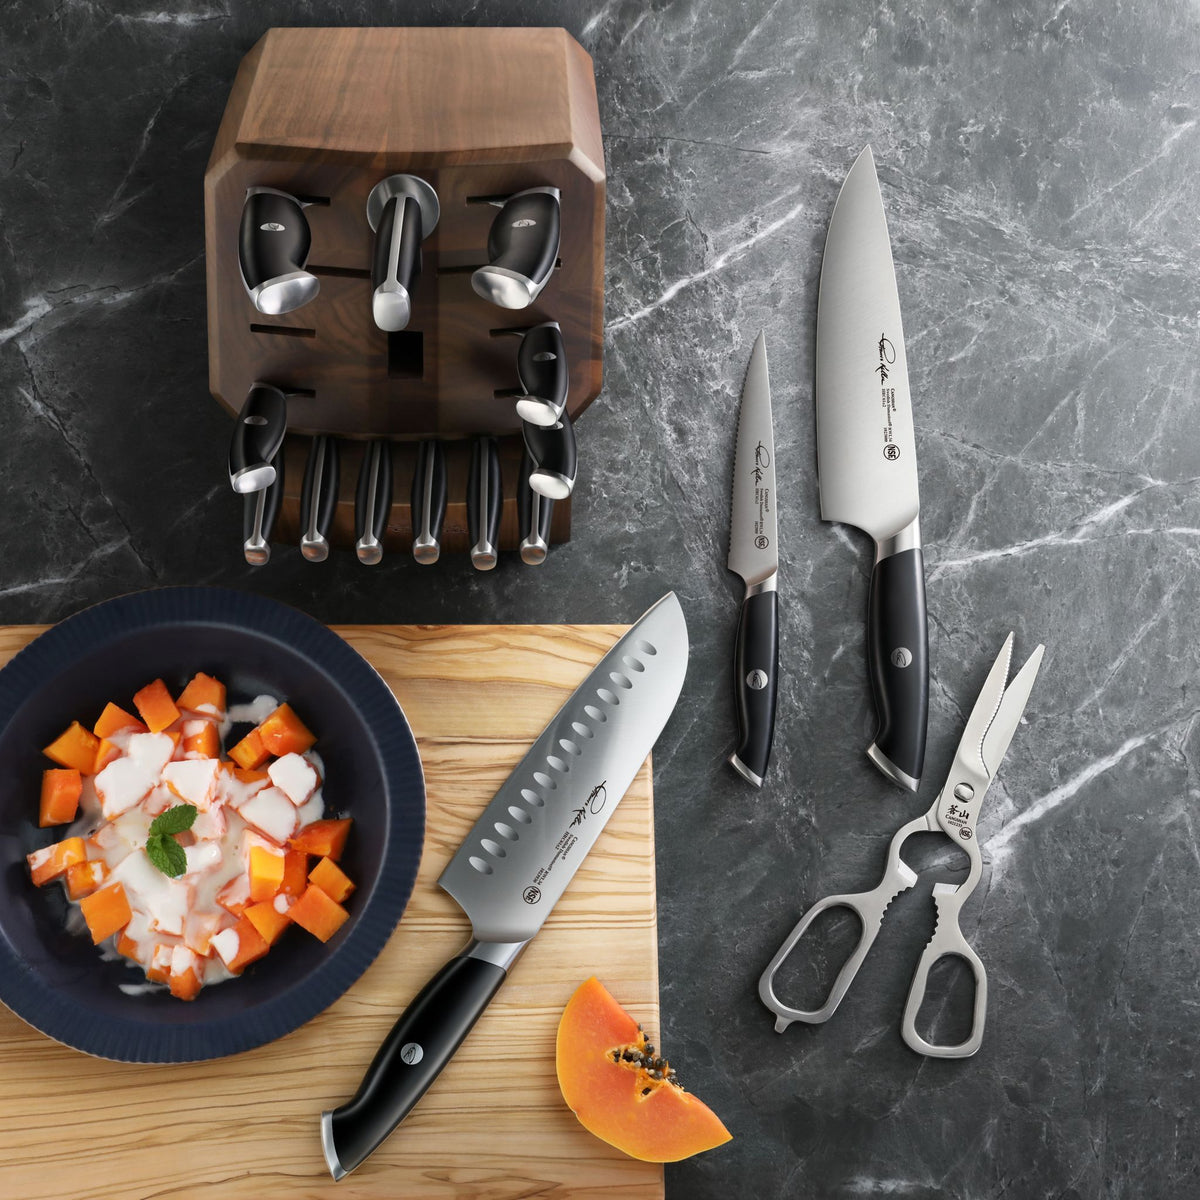 Cangshan Z Series 17 Piece Knife Block Set 1024180 for sale online